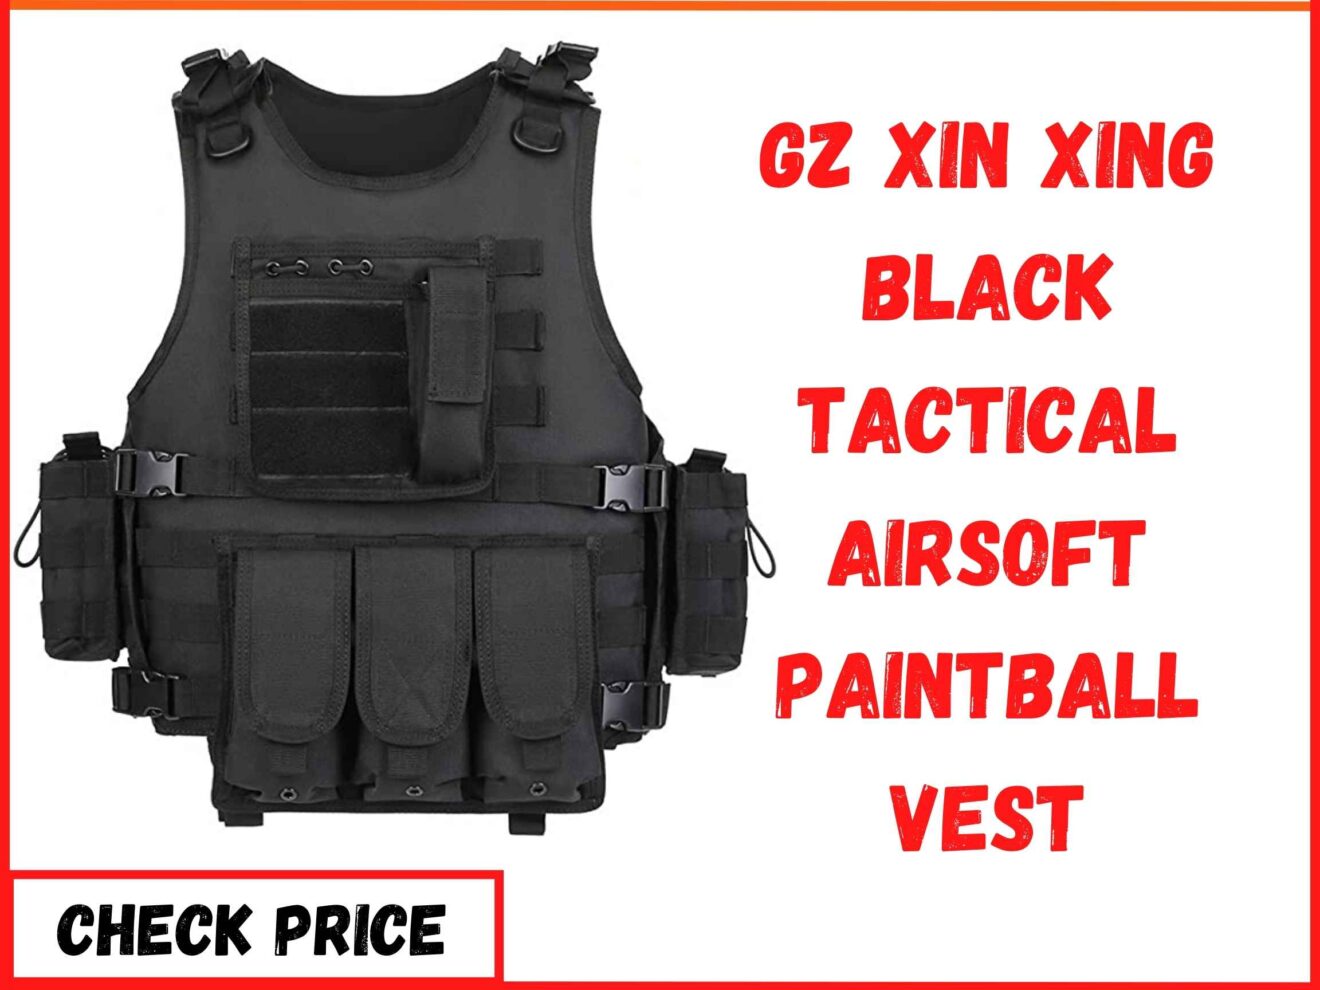 Cost-Effective Tactical Vests